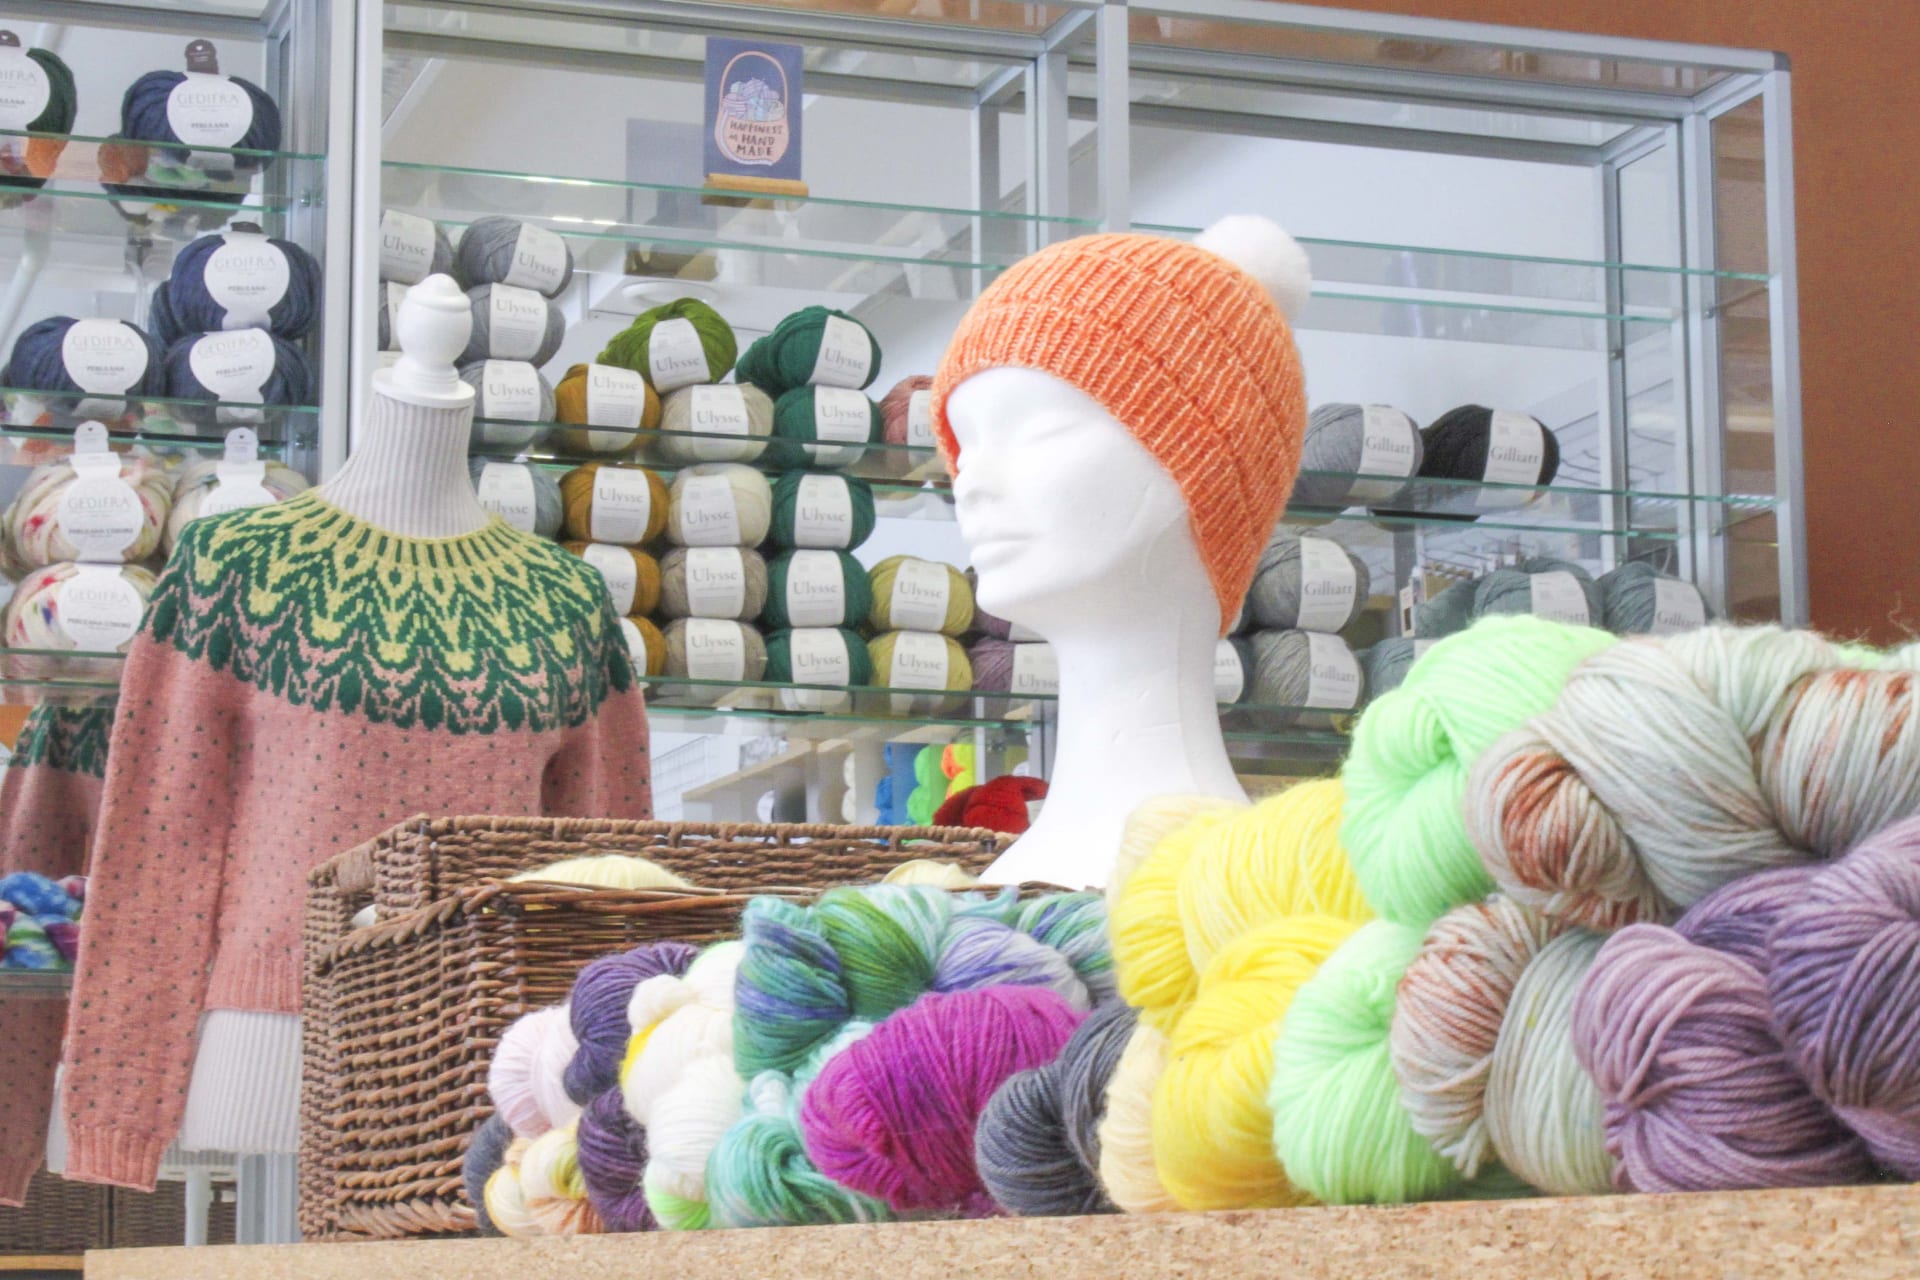 Colorful yarns and knits